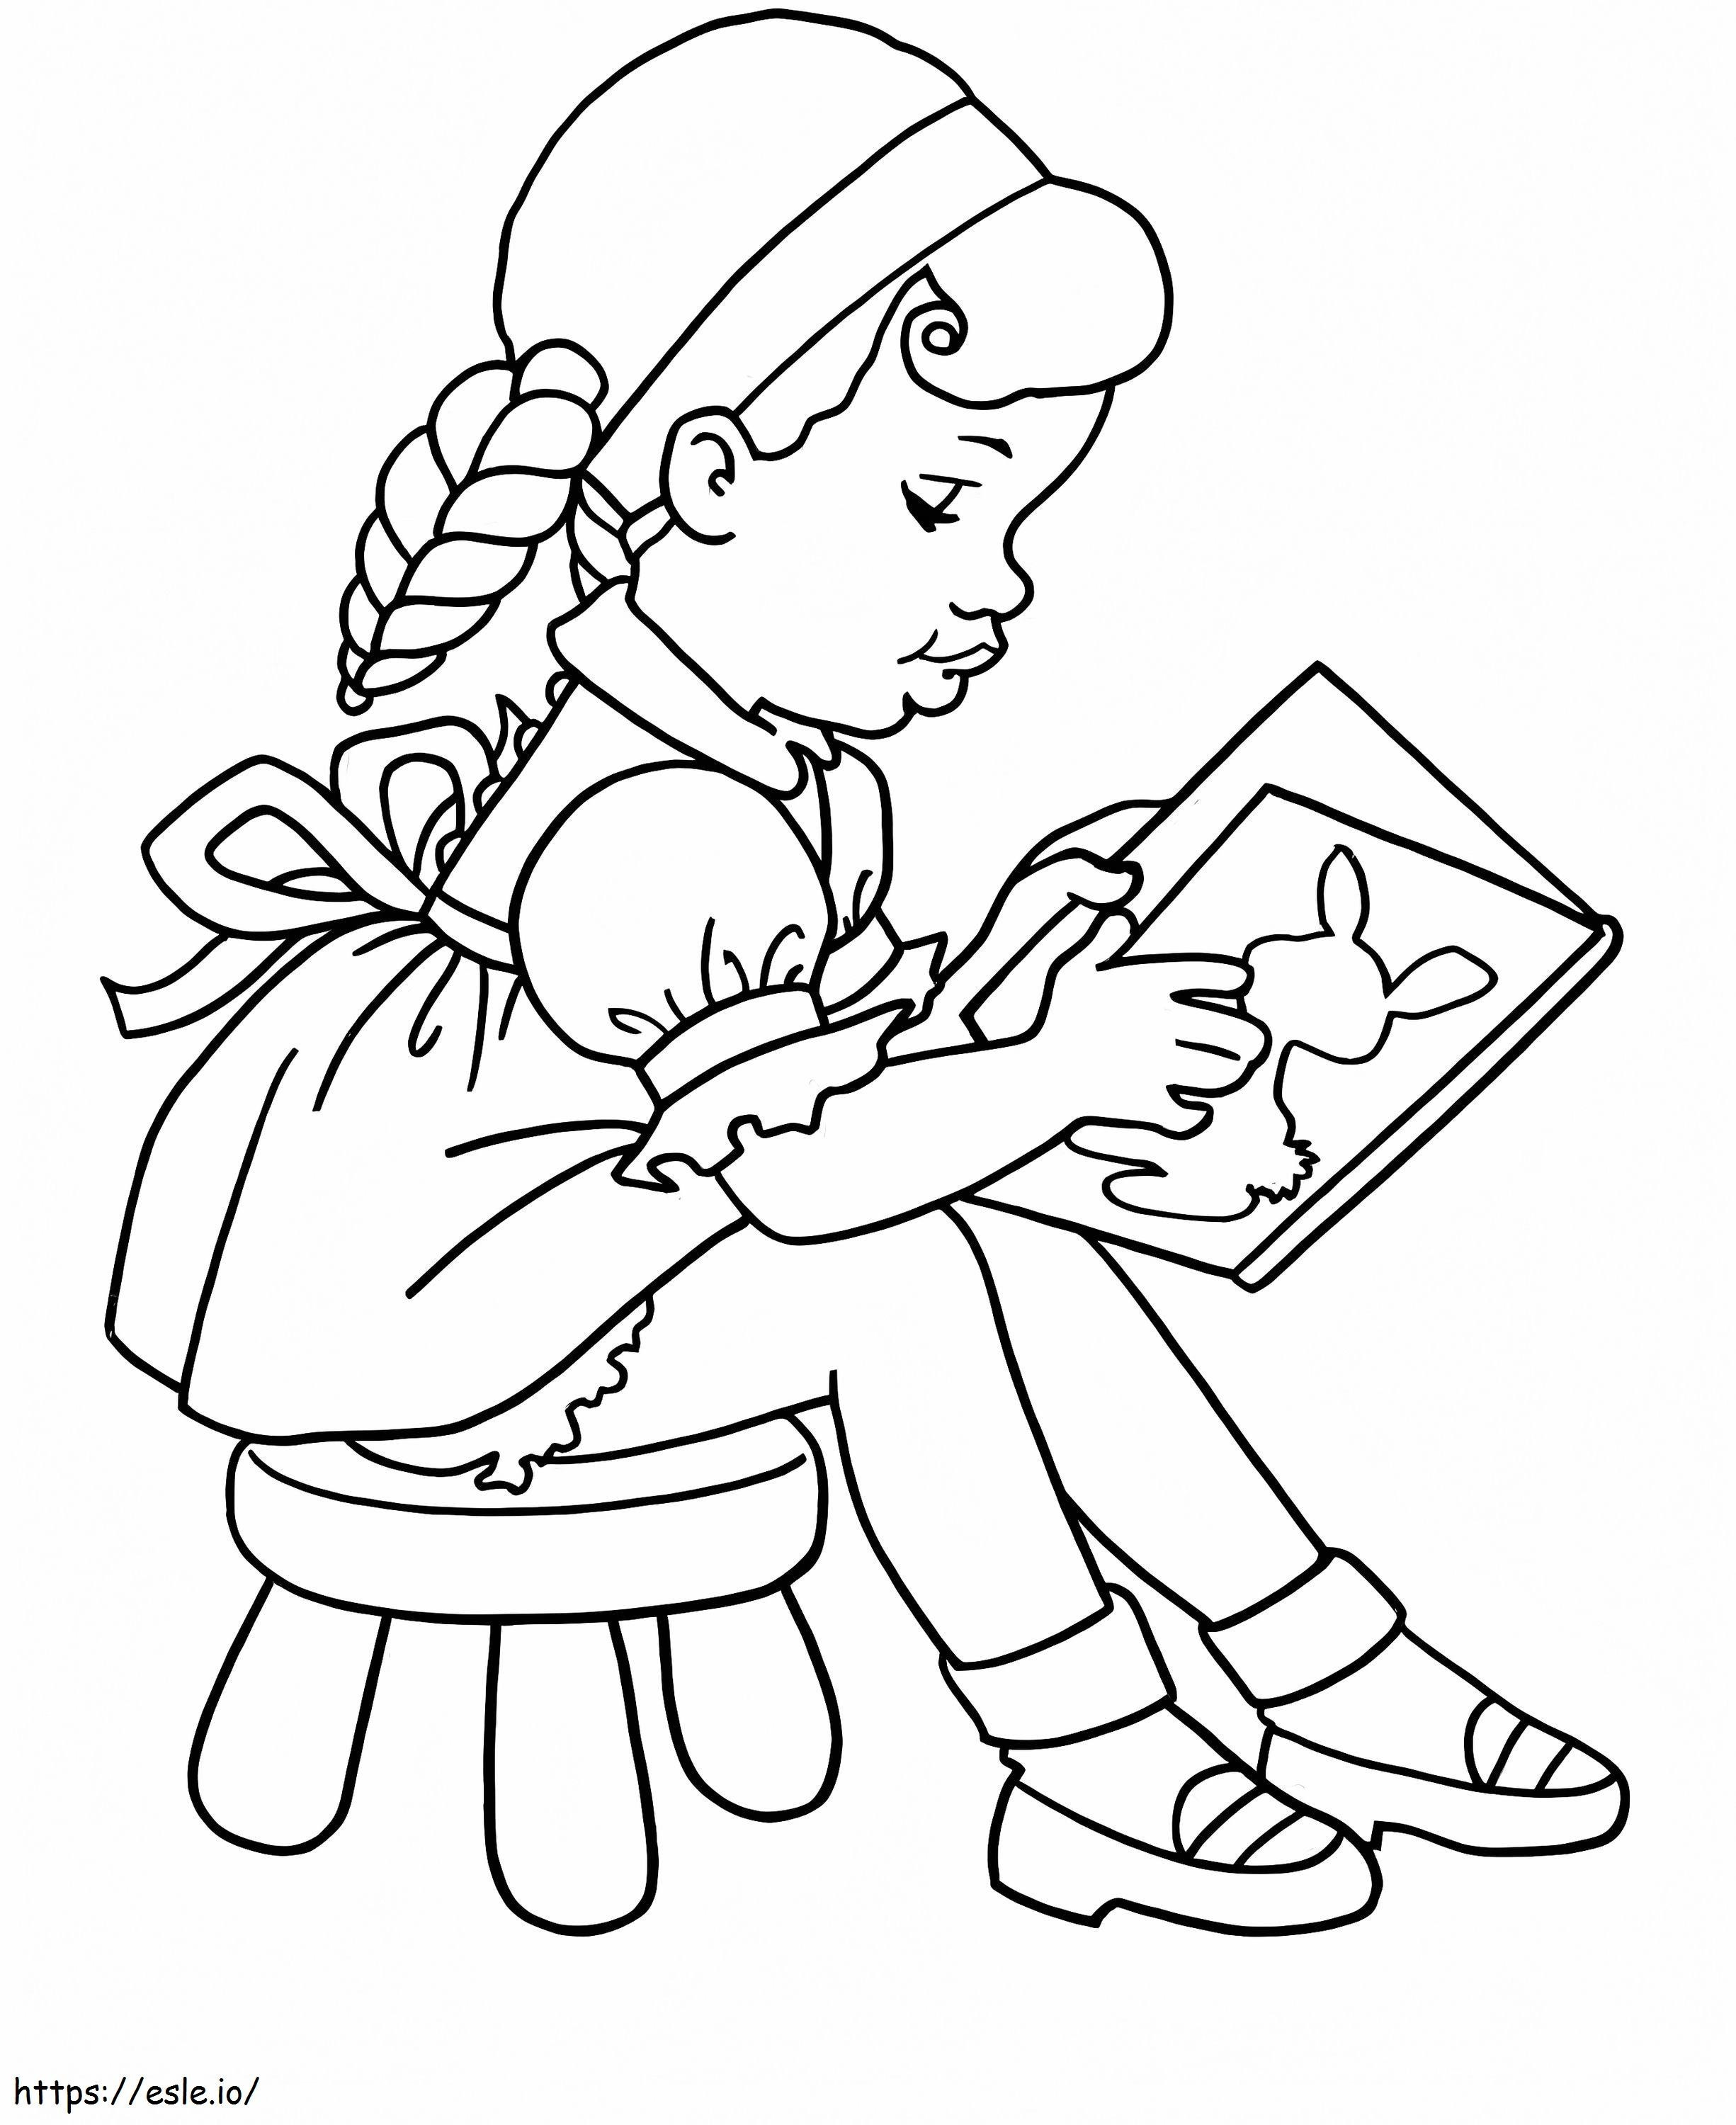 Nina Reading A Book At School coloring page